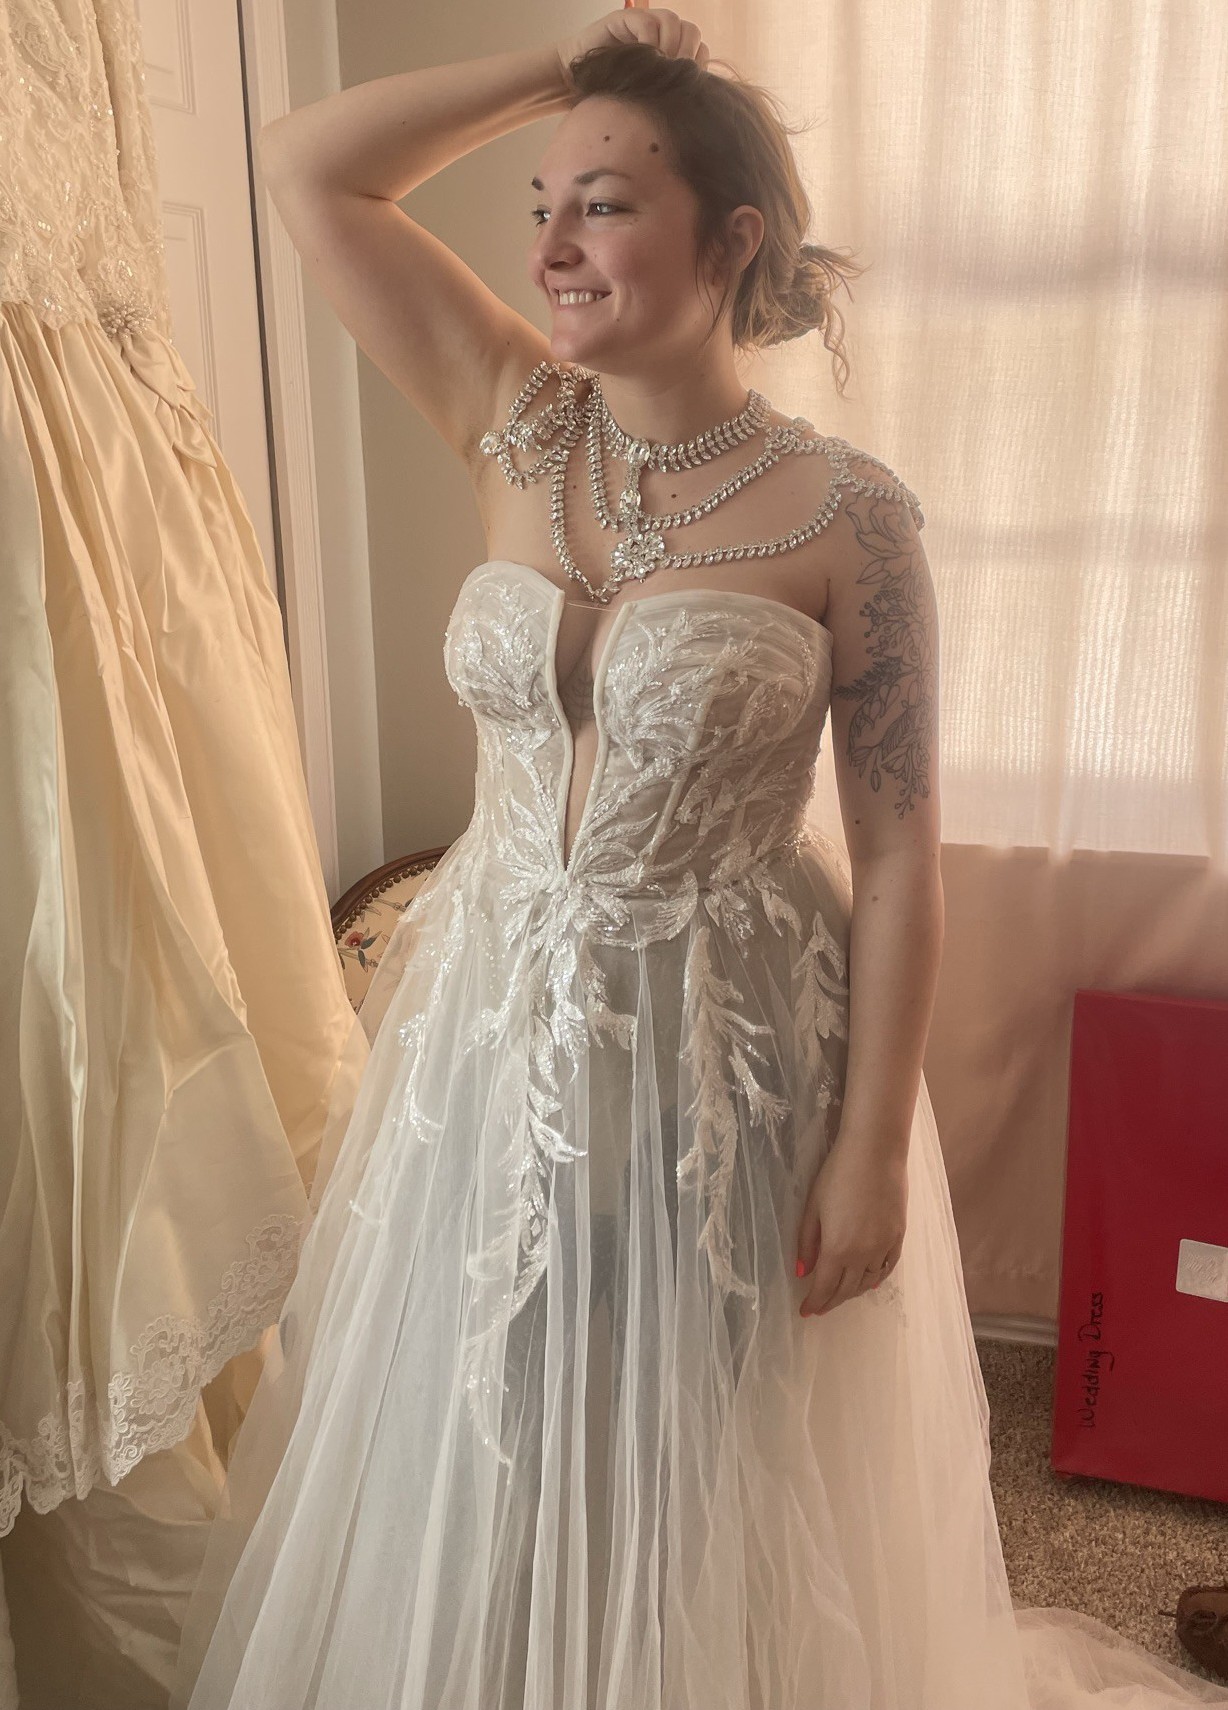 BRAND NEW NEVER WORN GALINA SIGNATURE WEDDING DRESS SIZE 12, SLIP